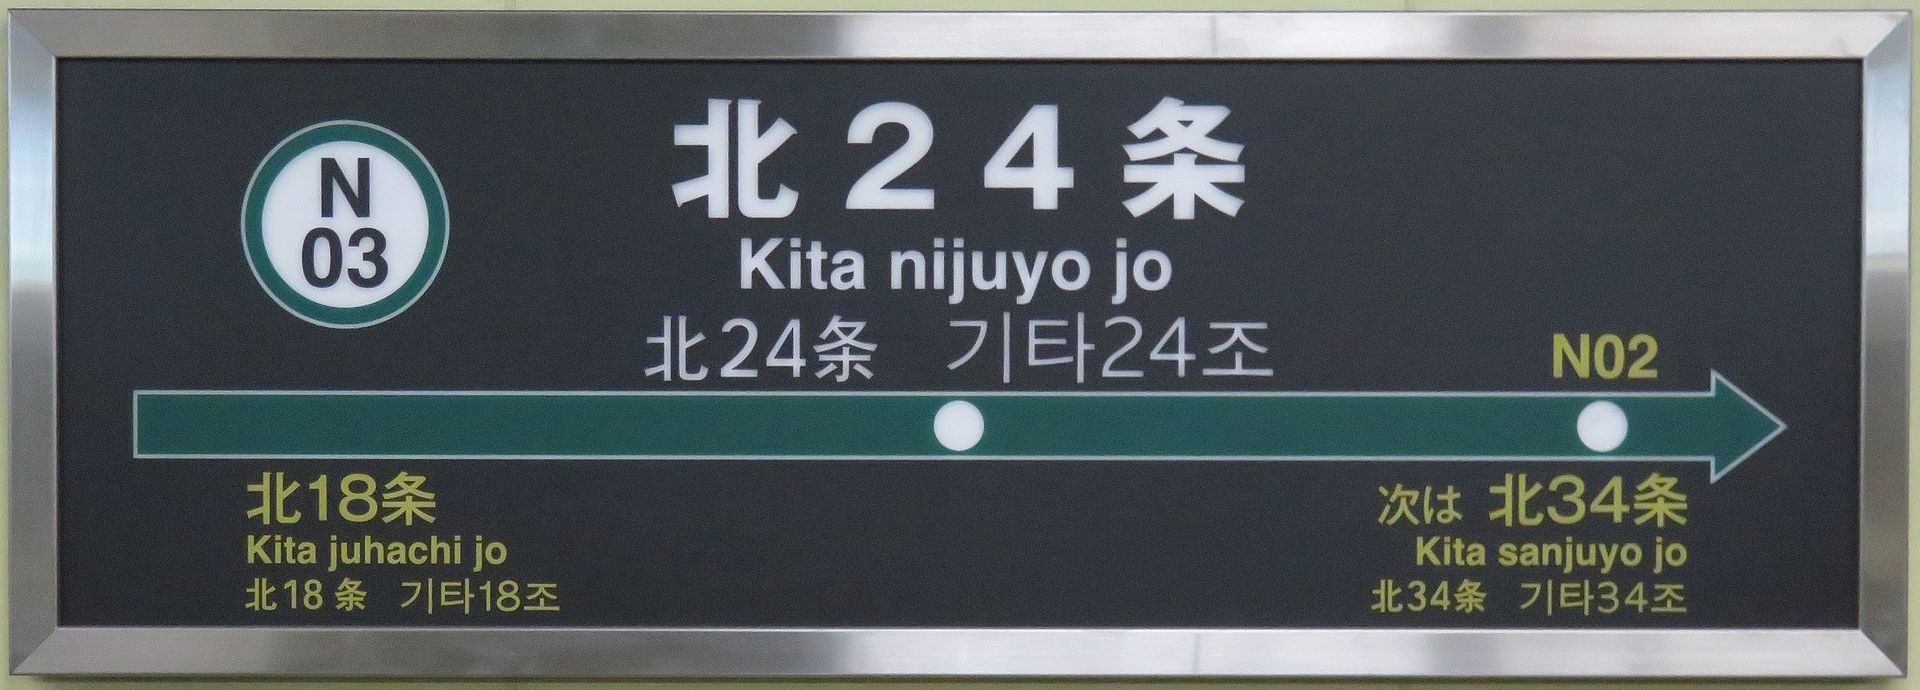 Kita_nijuyo_jo_Stations